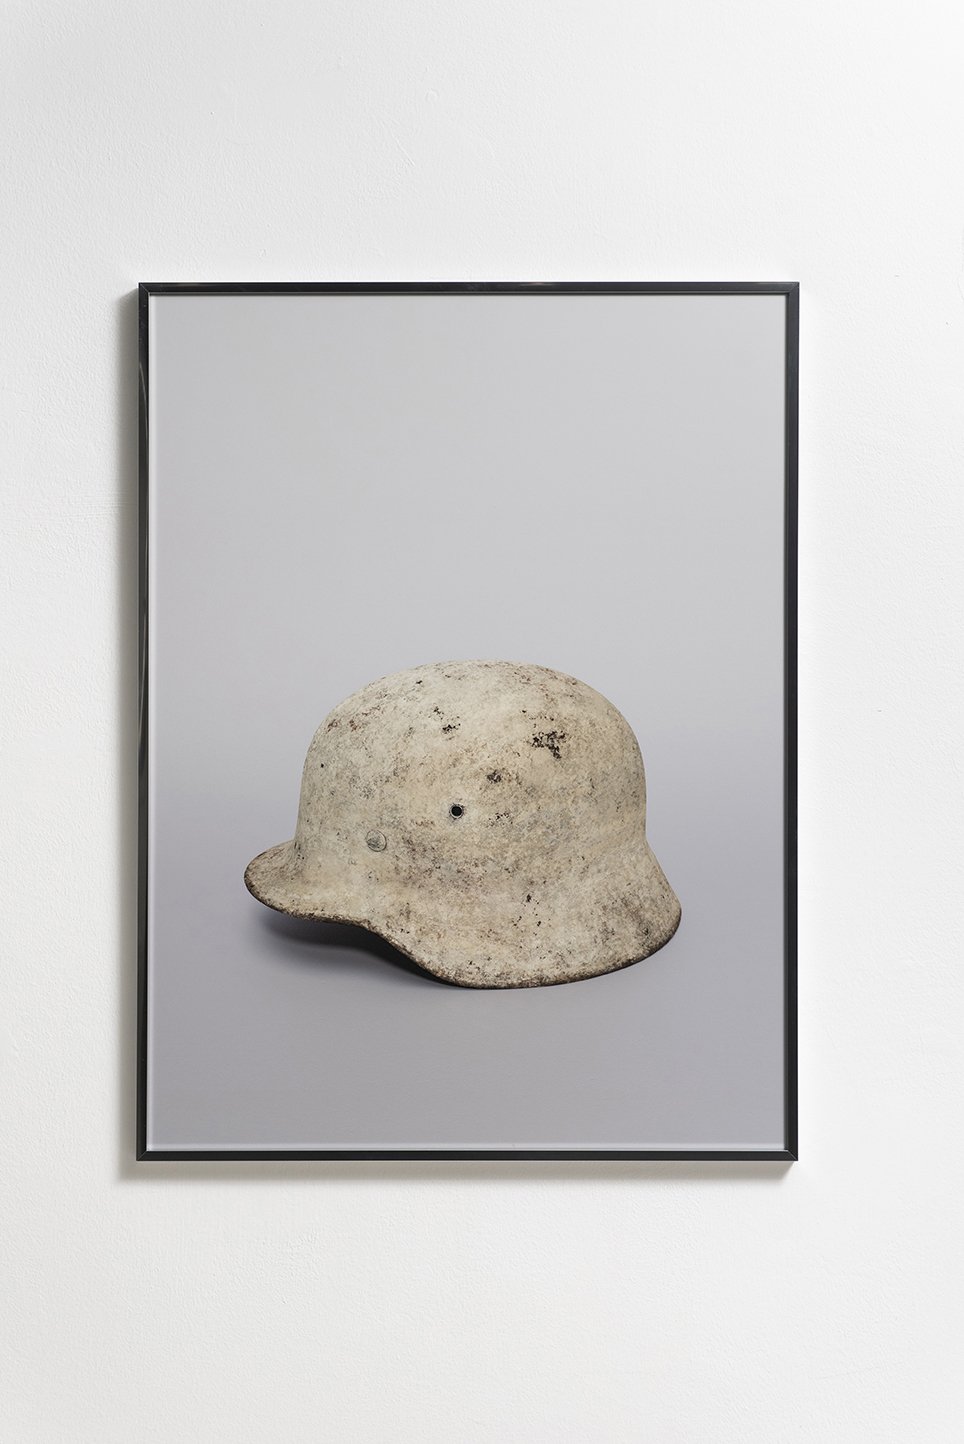   Untitled   2021, digital sculpture, inkjet printed on paper in artist’s frame (Aluminum), 82.2 × 62.4 × 1.8 cm 